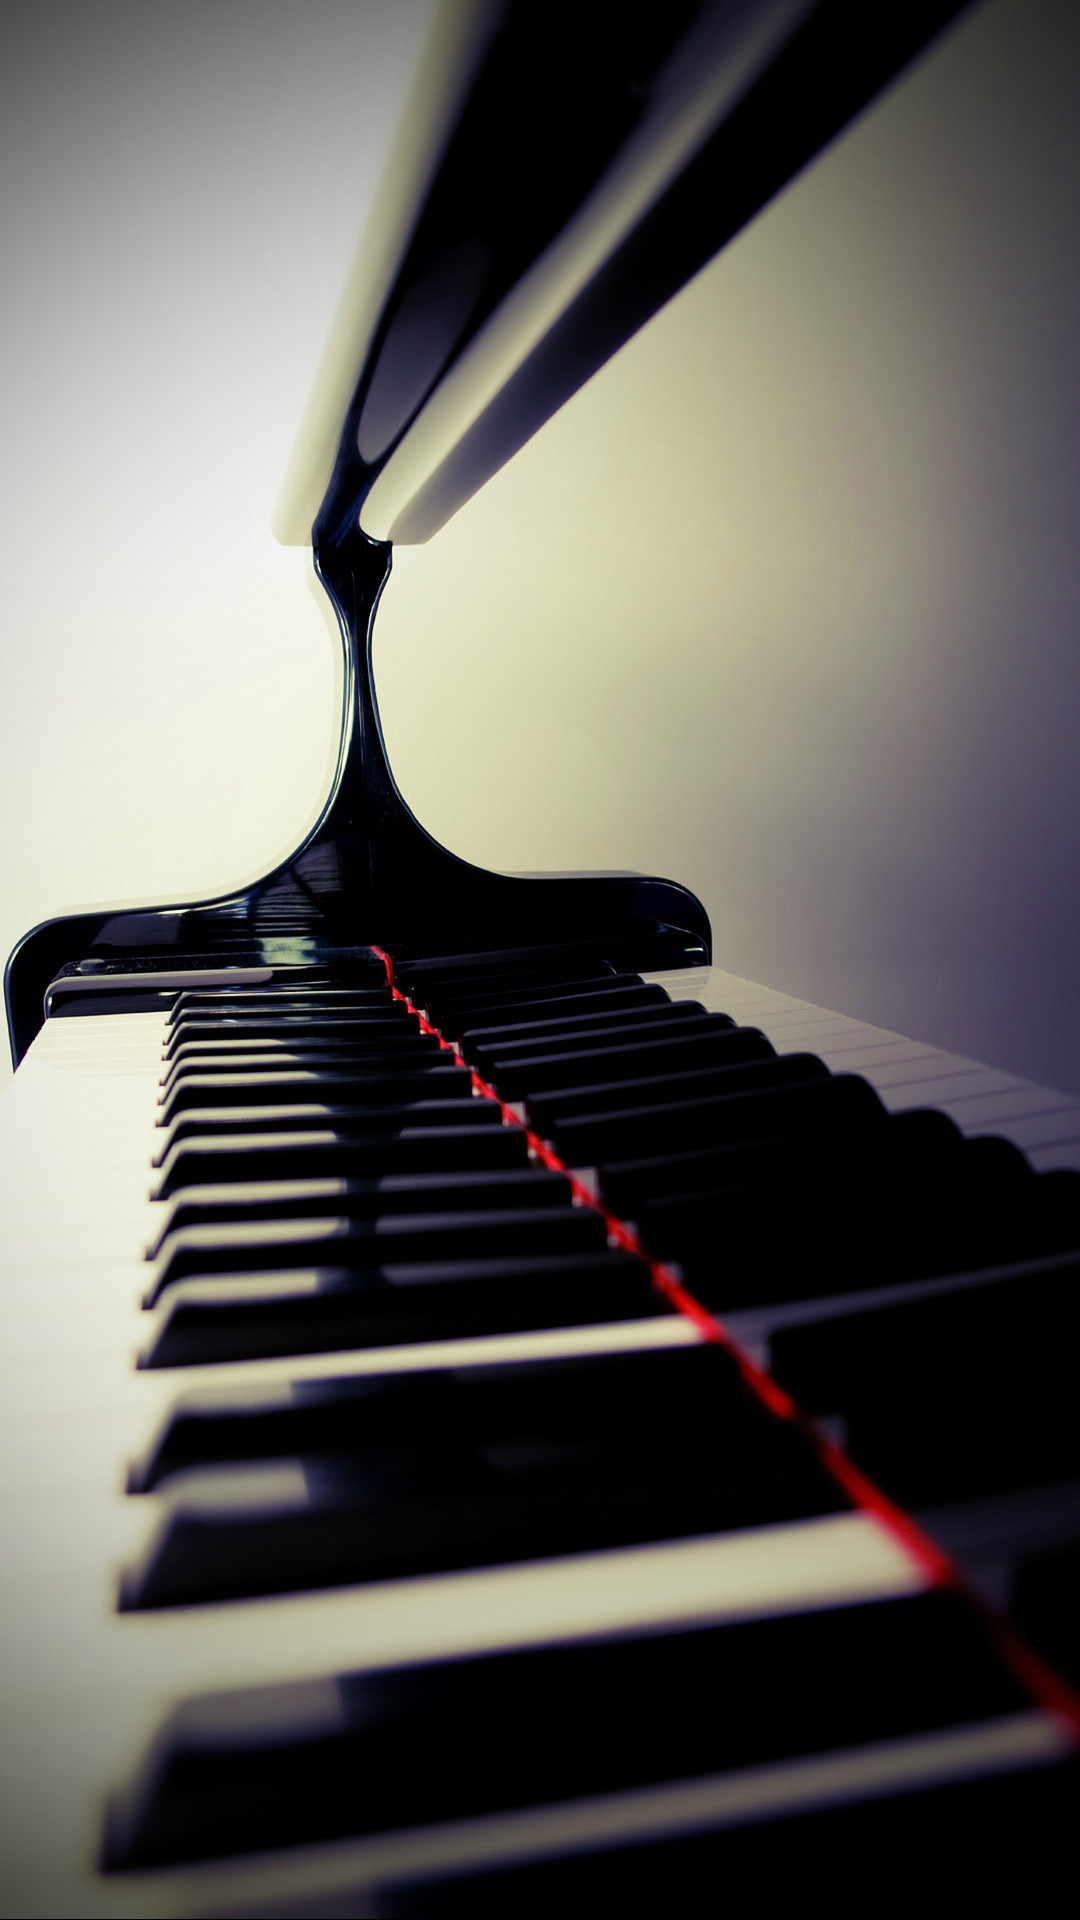 1080x1920 Stylish Piano Keys Black and White Blurred